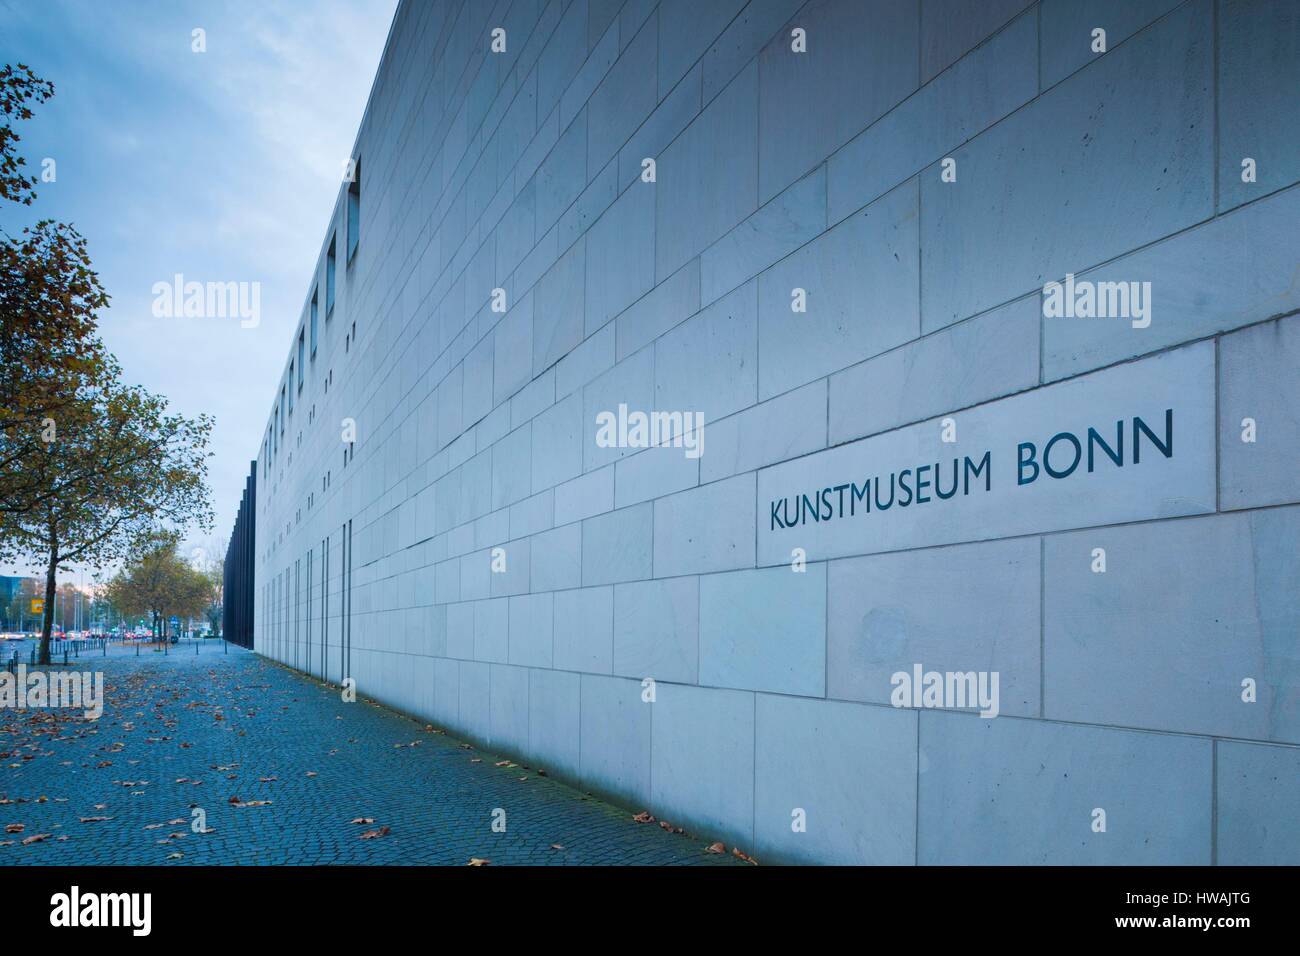 Allemagne, Nordrhein-Westfalen, Bonn, Museumsmeile, Kunstmuseum de Bonn, musée d'art, sign Banque D'Images